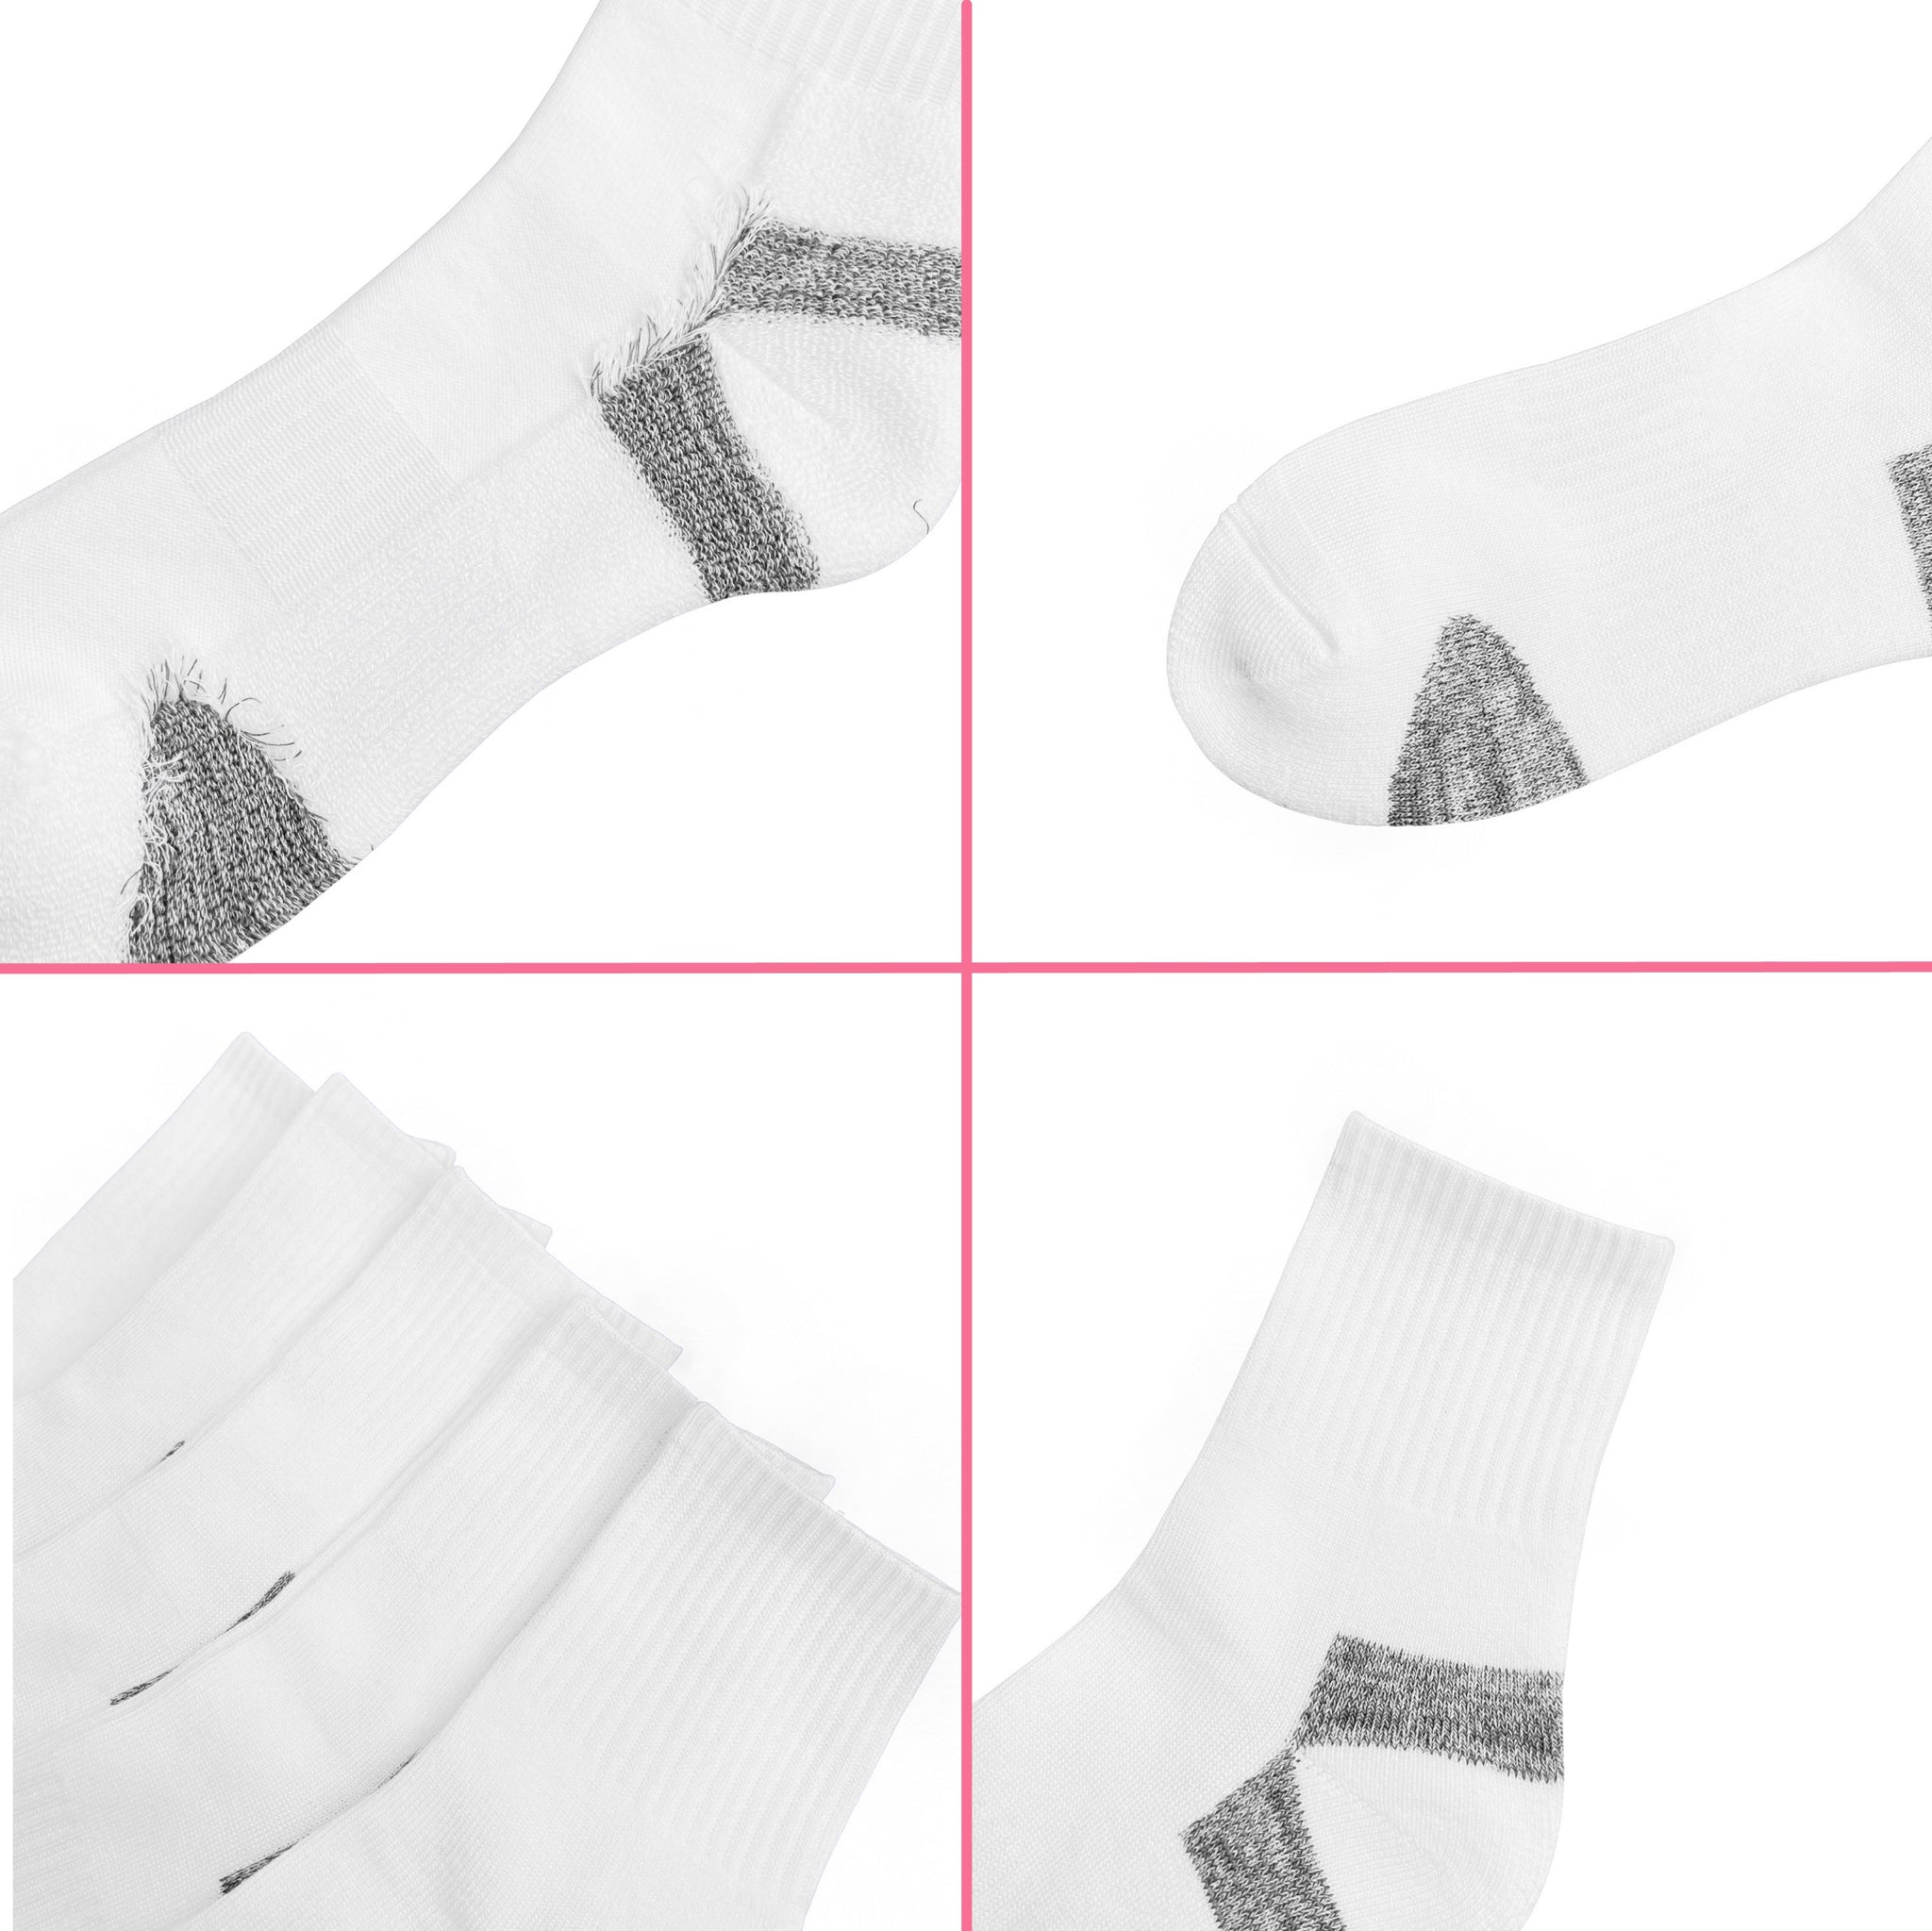 Bamboo Women Crew Socks Cushion Moisture Wicking Athletic Odor Resistant Sock 5 Pairs - Serisimple